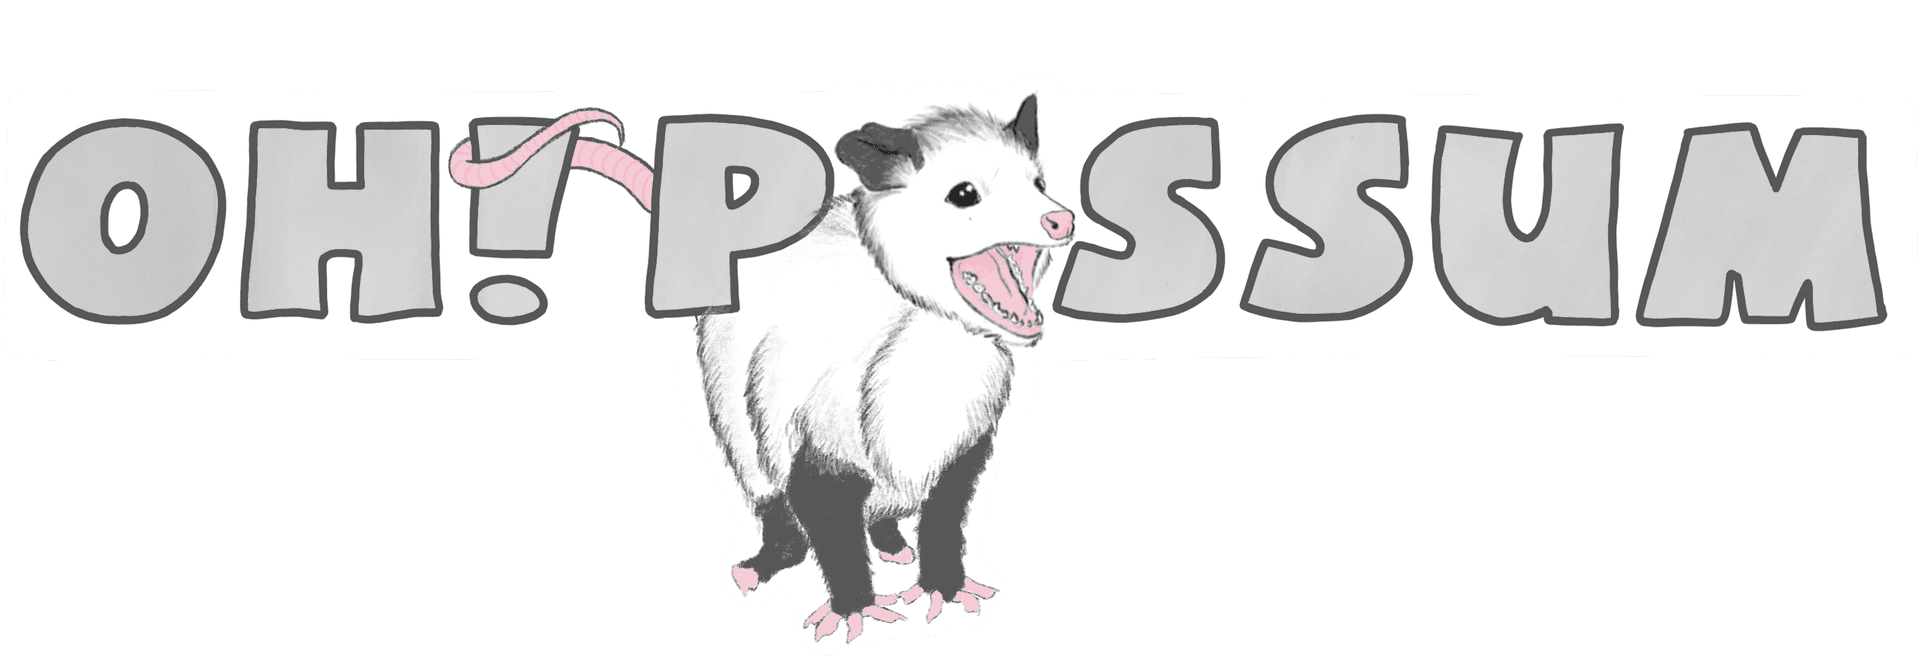 Oh Possum Cartoon Illustration PNG image